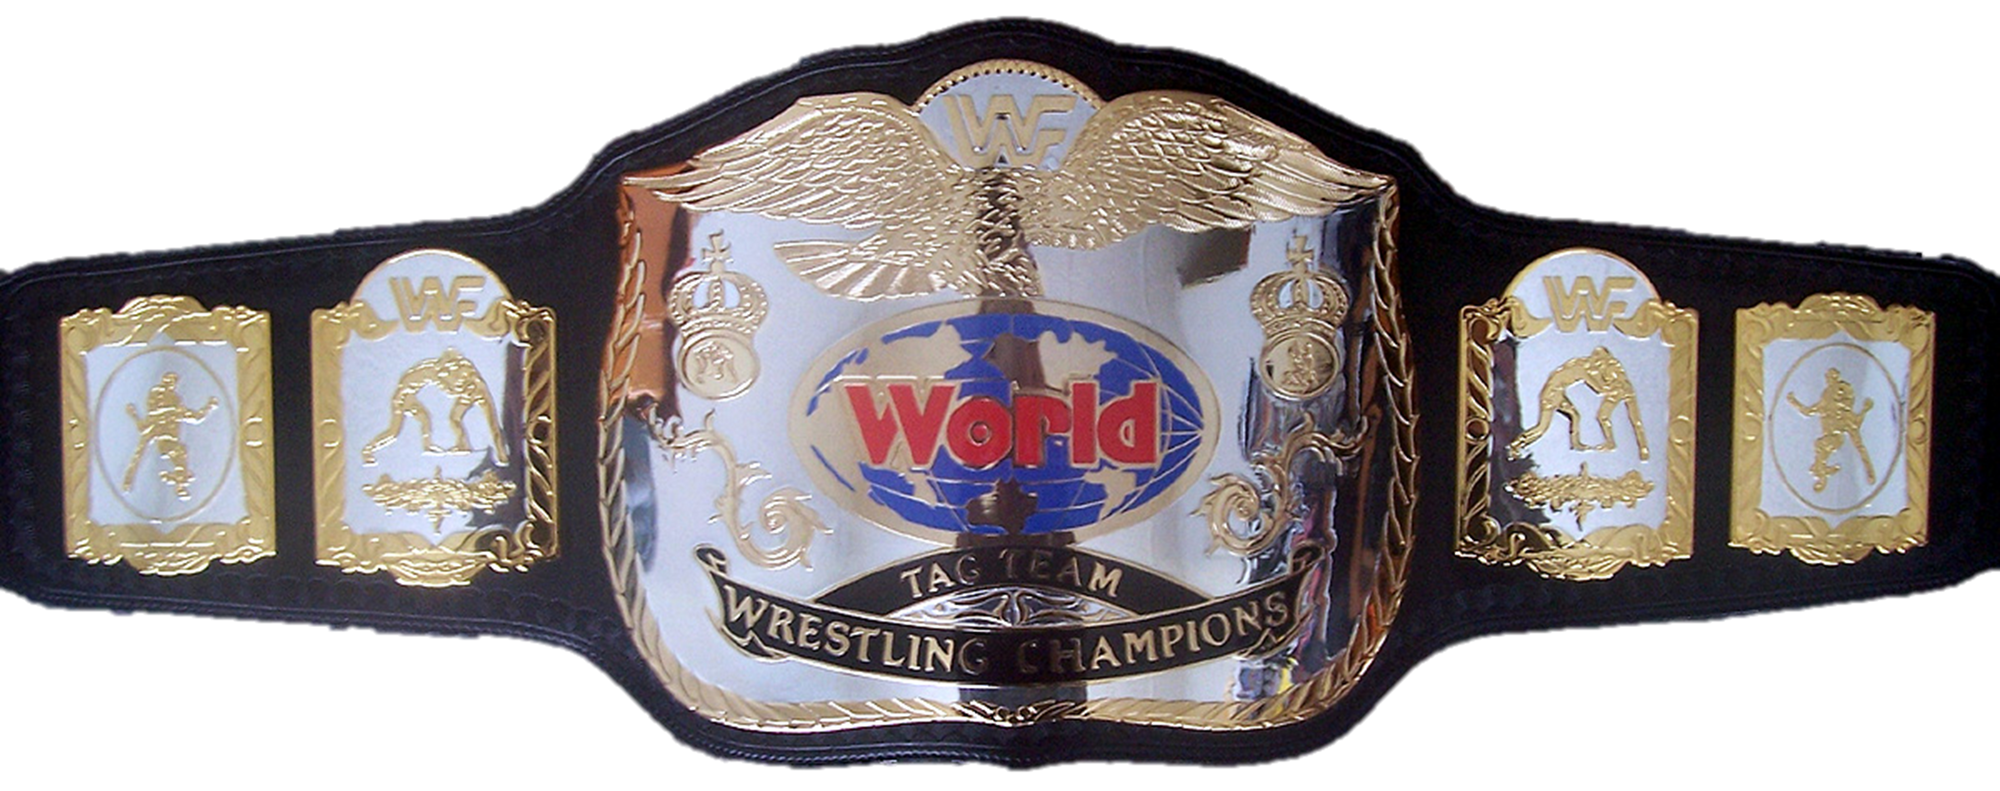 world-tag-team-championship-wwe-champion-gallery-pro-wrestling